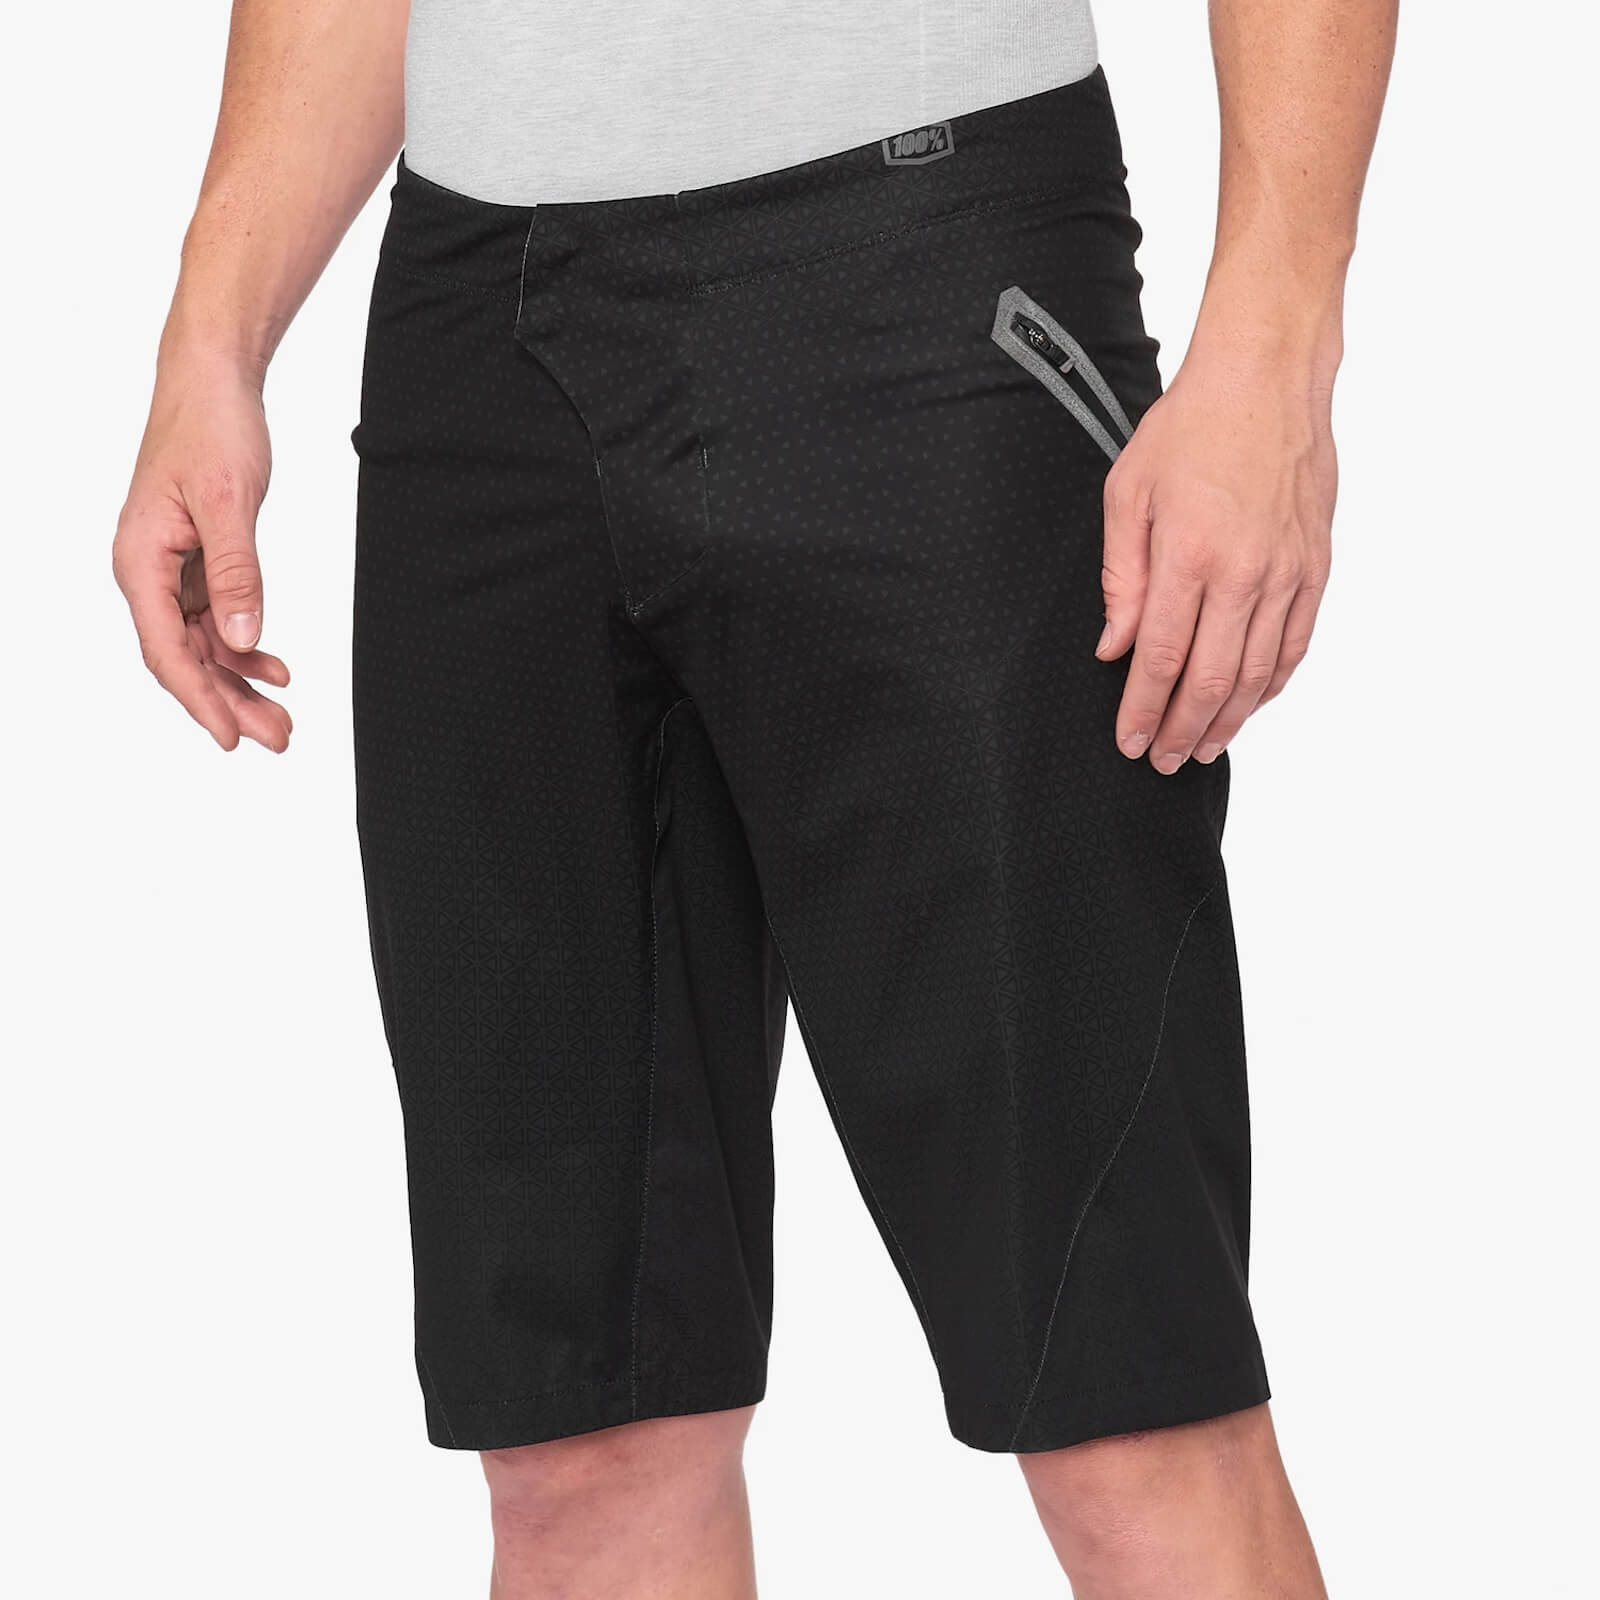 100% Hydromatic MTB Shorts - 36